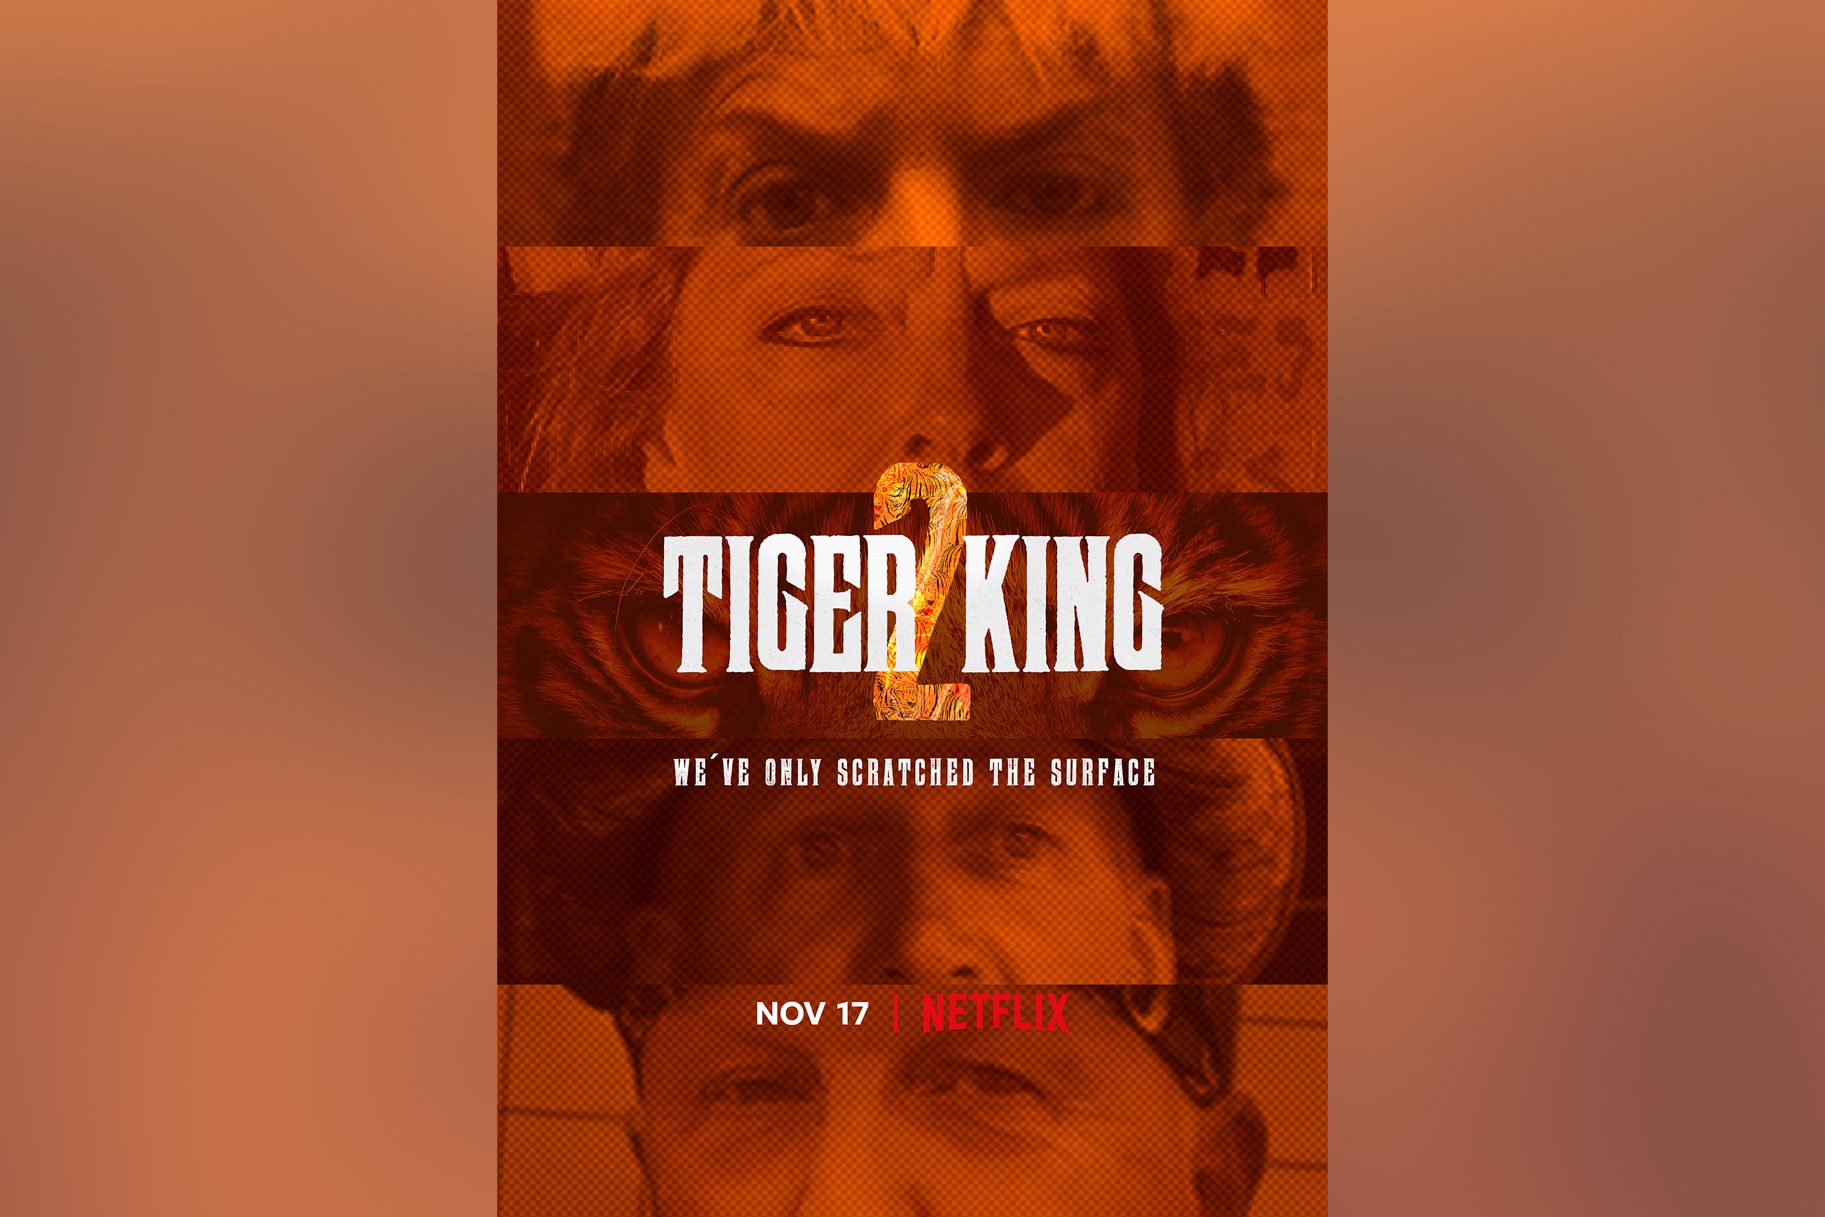 Tiger King 2 Netflix